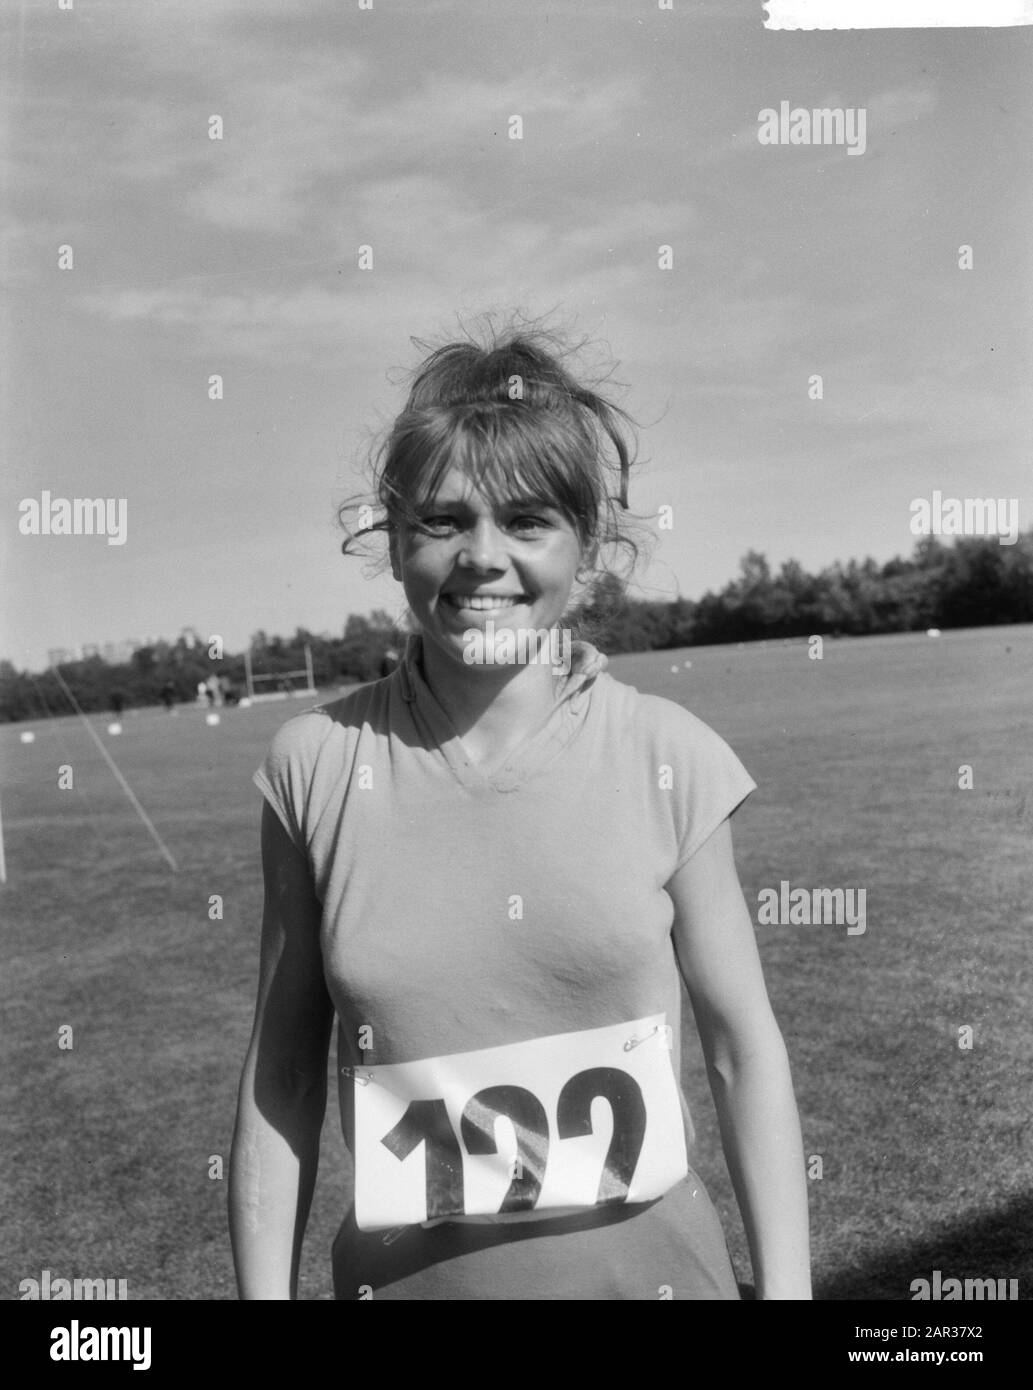 Dutch Athletics Championships in Groningen, Hilda Slaman Date: August 14, 1965 Location: Groningen Keywords: Athletics, Championships Personal name: Hilda Slaman Stock Photo